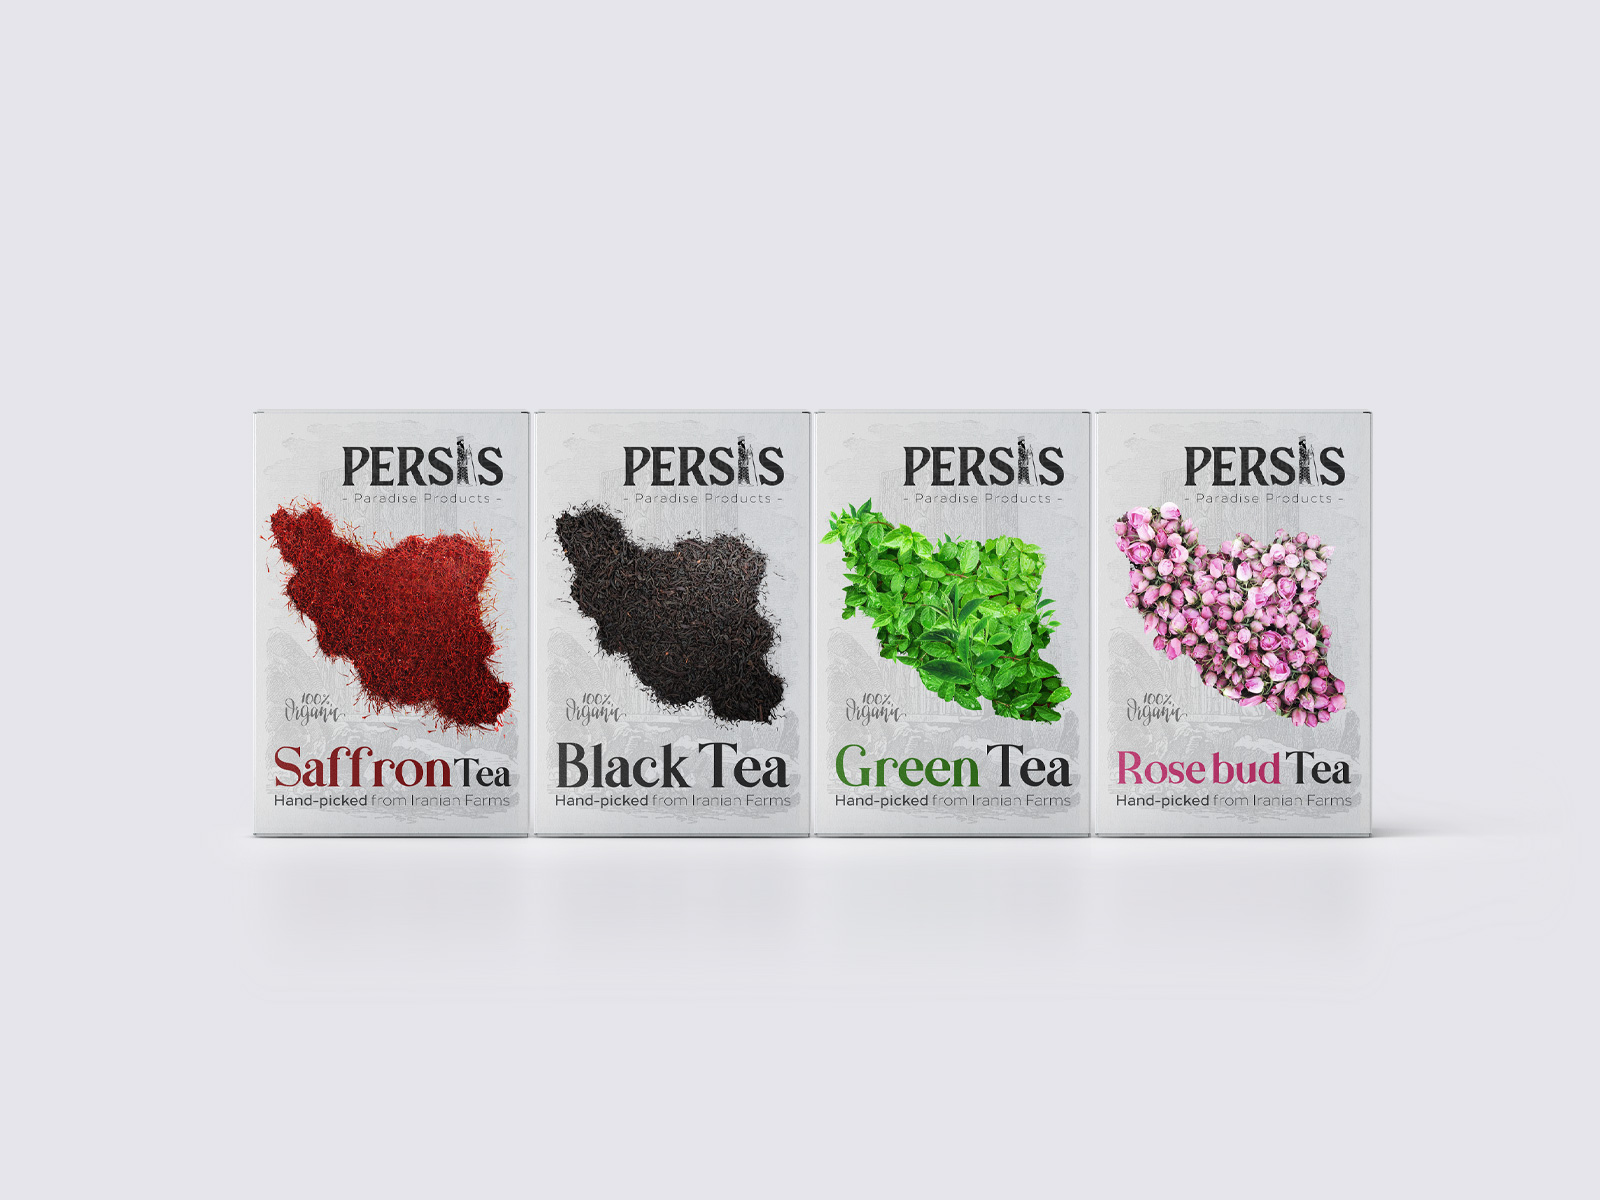 Studio Metis Created Packaging Design for Persis Herbal Tea